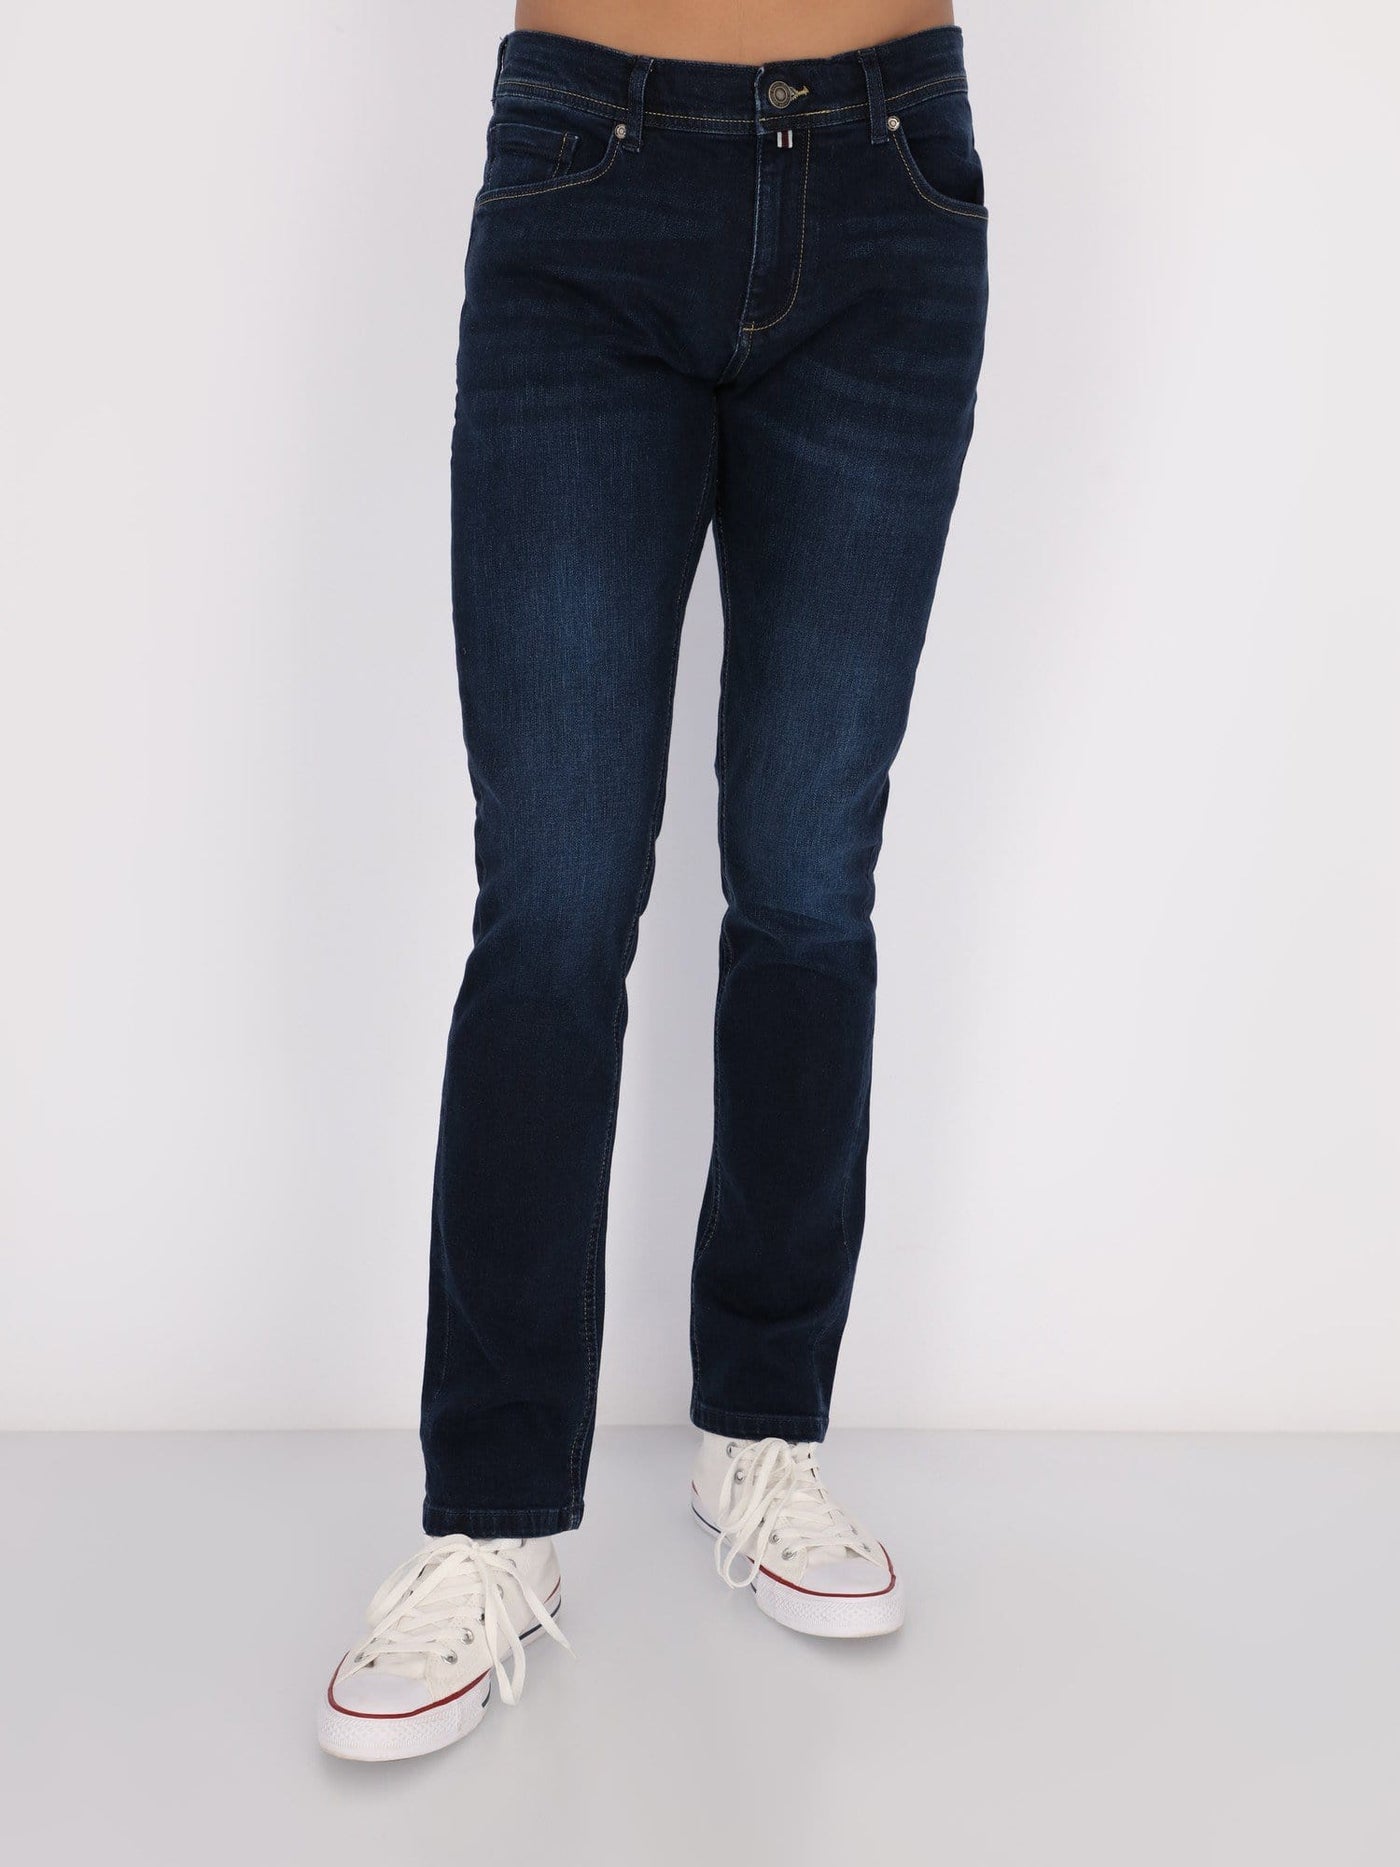 Daniel Hechter Jeans Navy Blue / 30 Slim Legs Jeans Pants